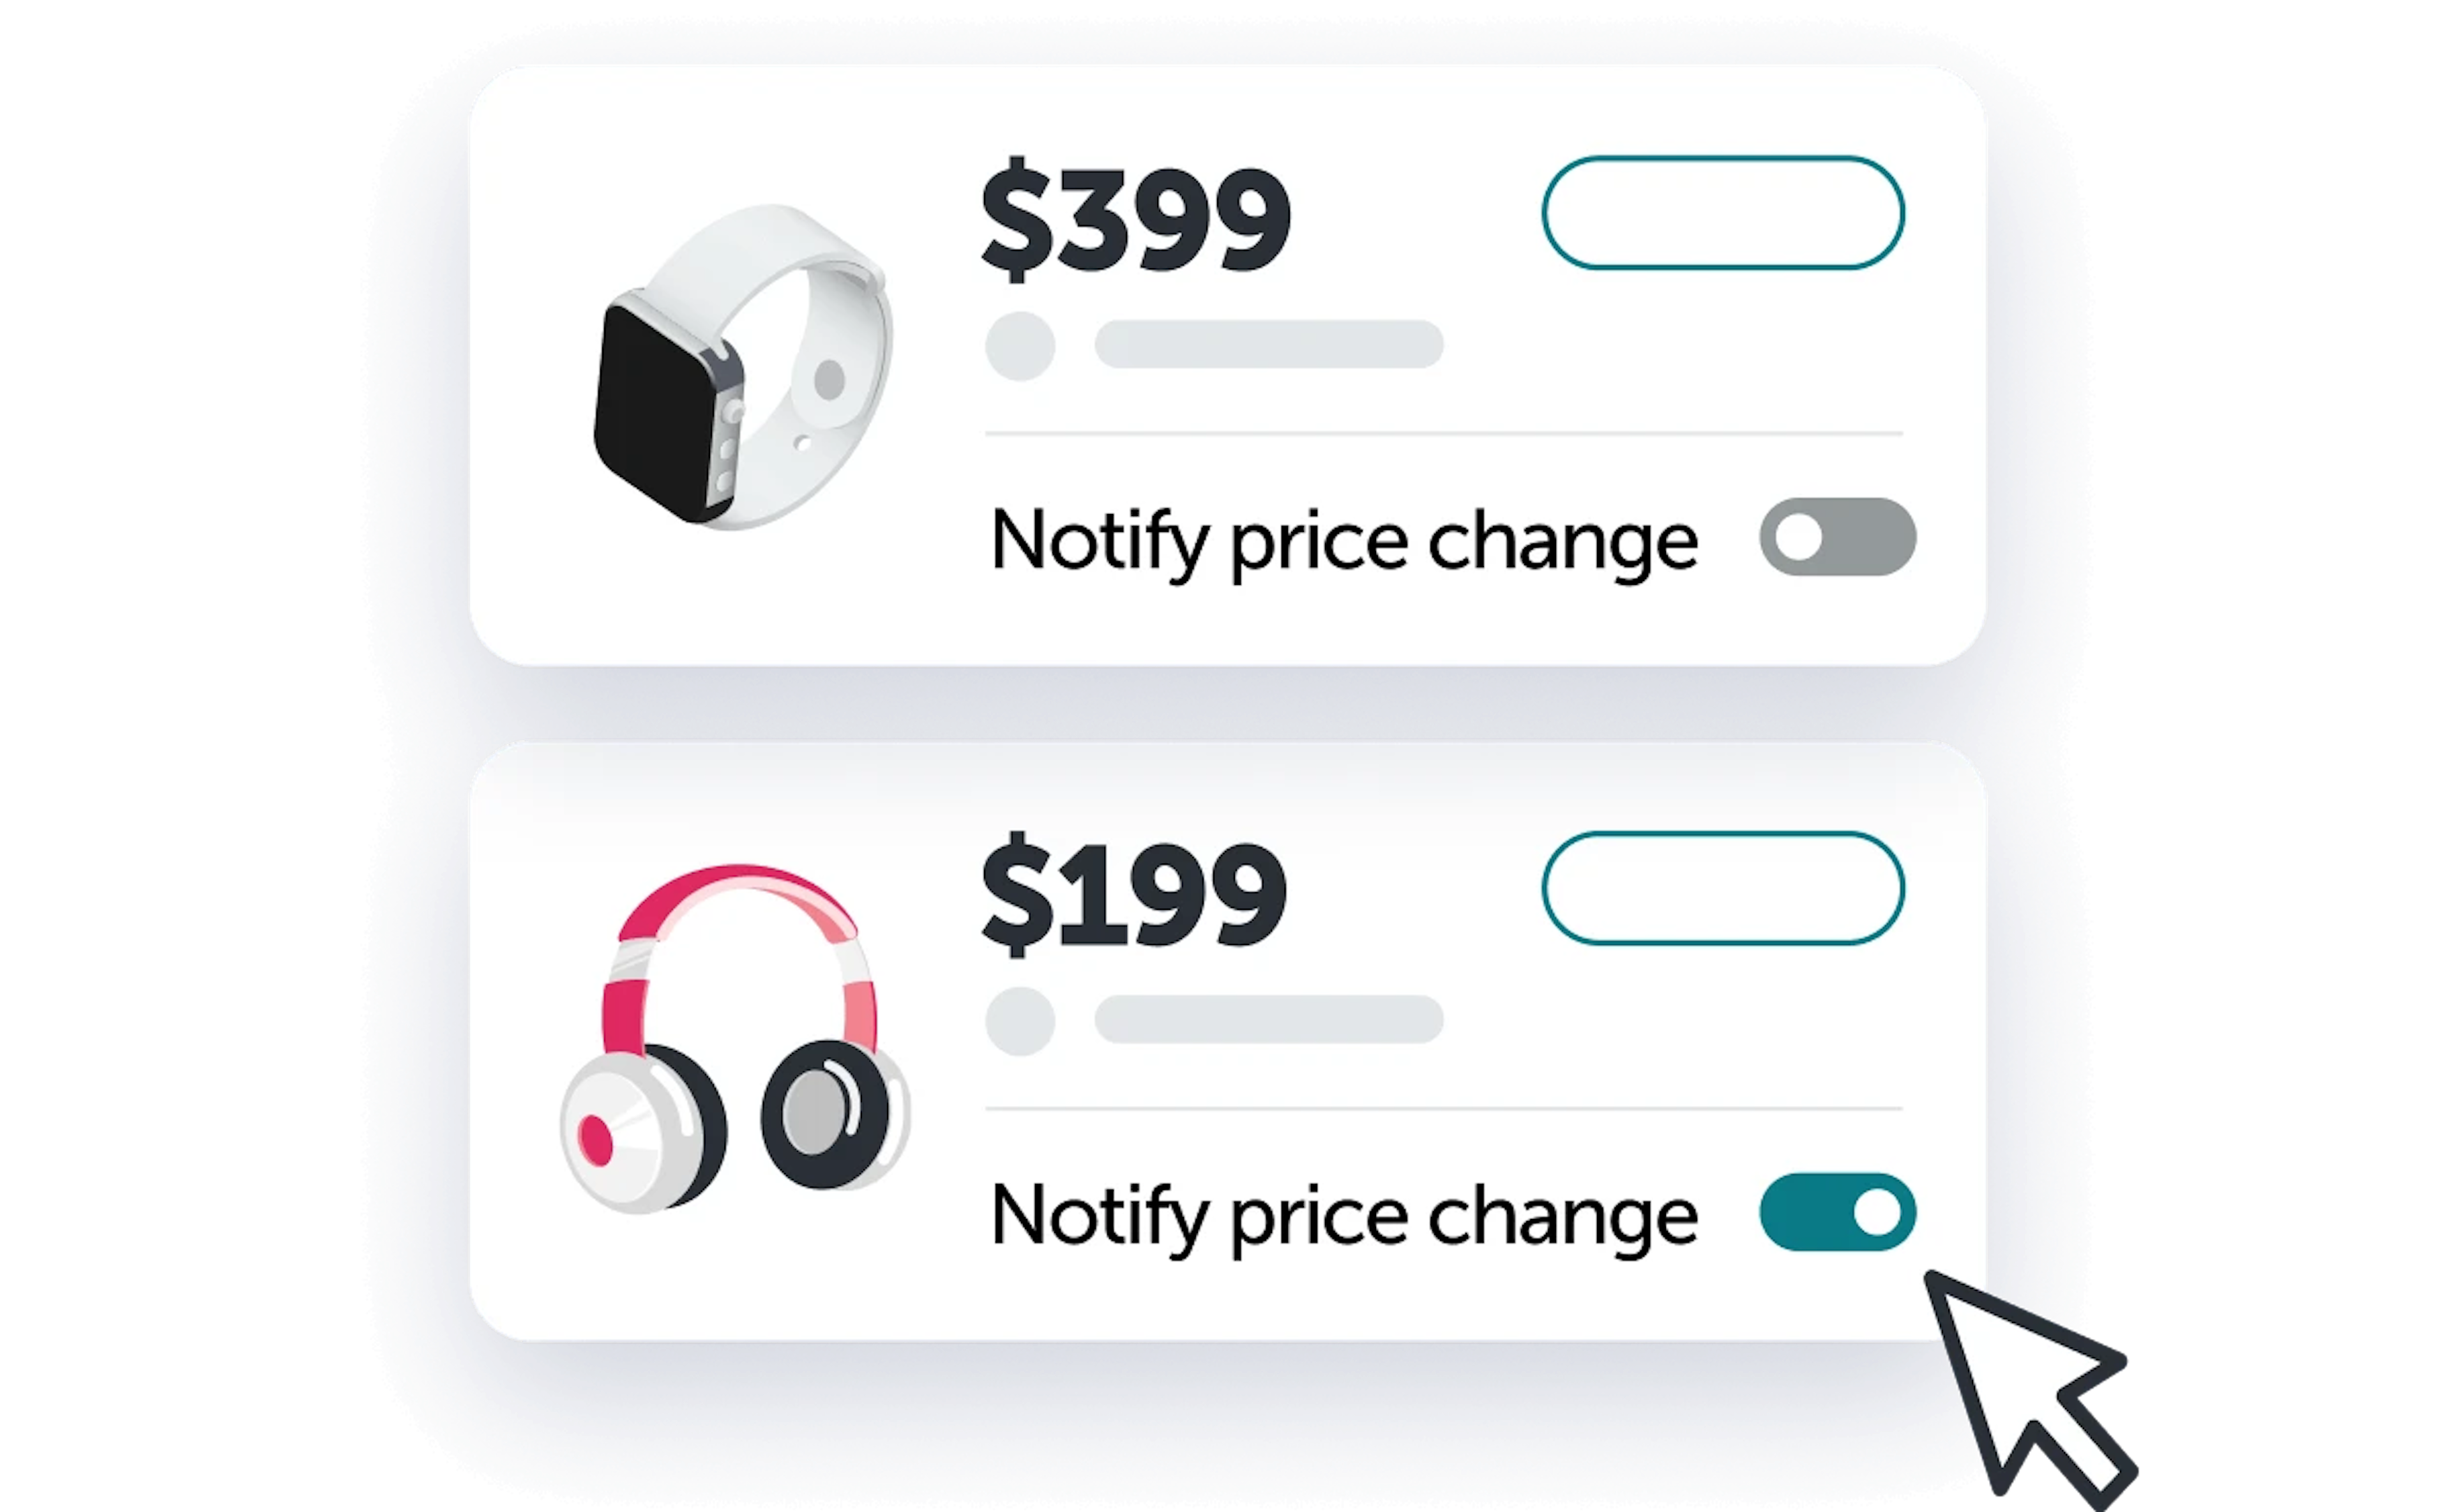 Notify of price change